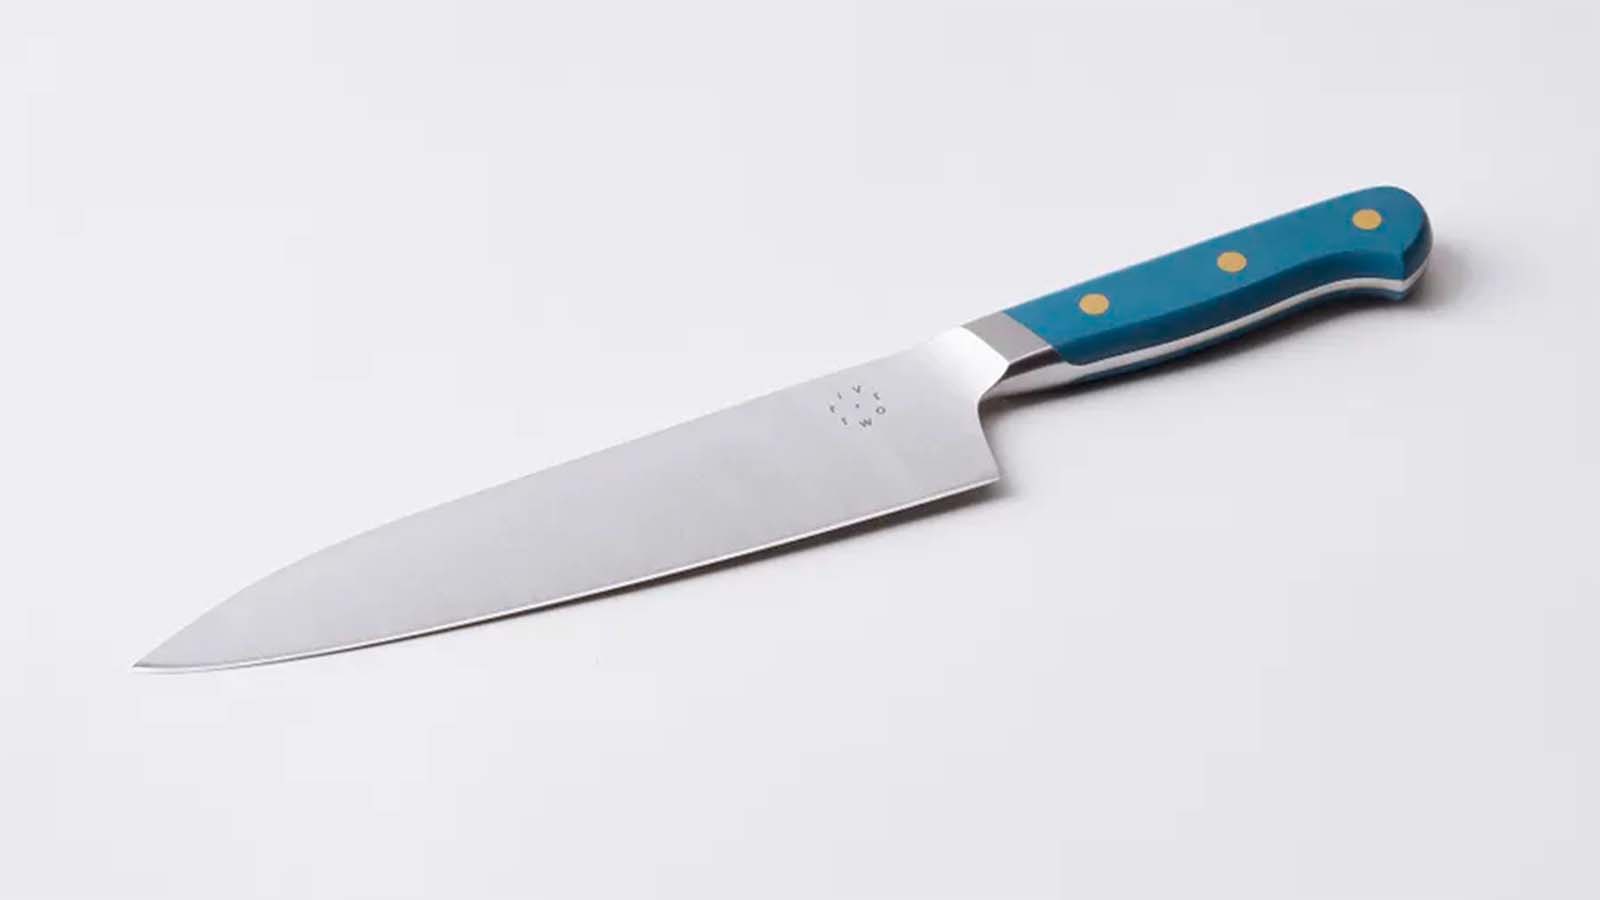 https://media.cnn.com/api/v1/images/stellar/prod/food-52-kitchen-knives.jpg?q=h_900,w_1600,x_0,y_0